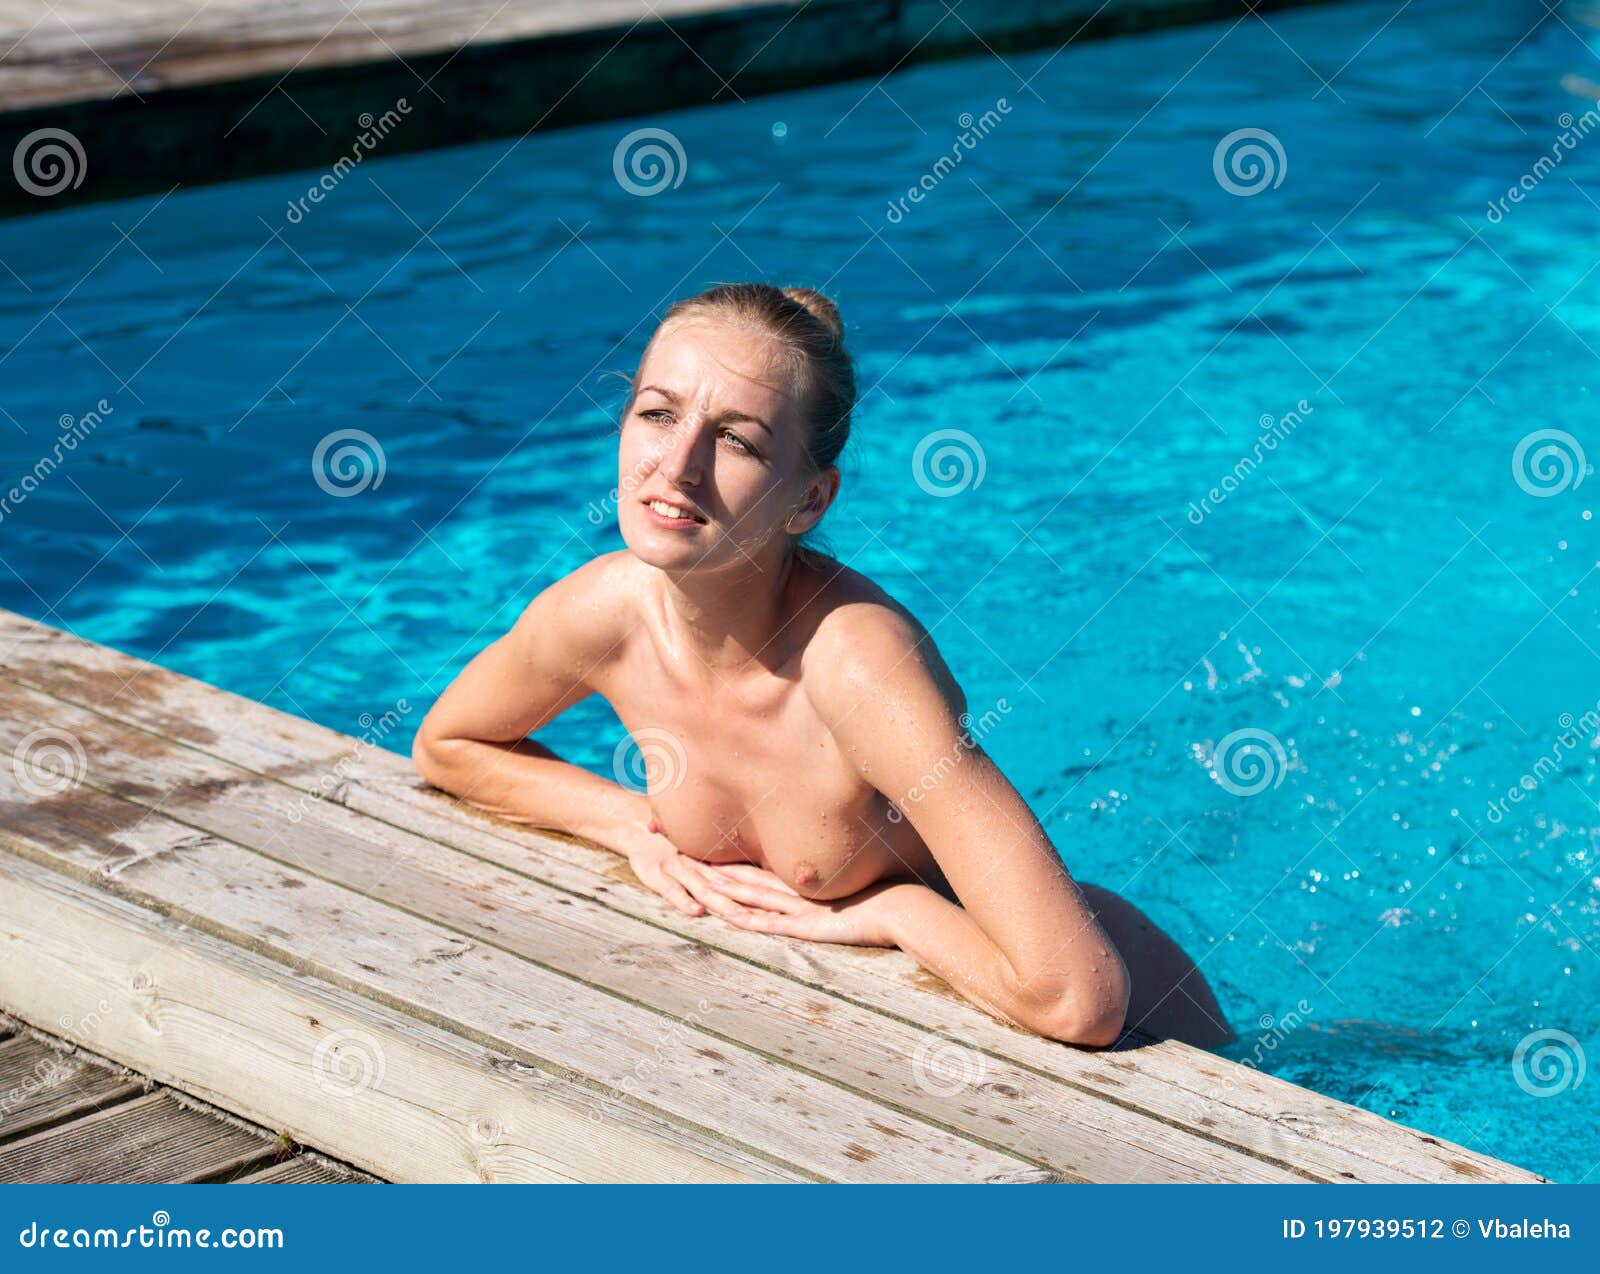 Naked people in pool